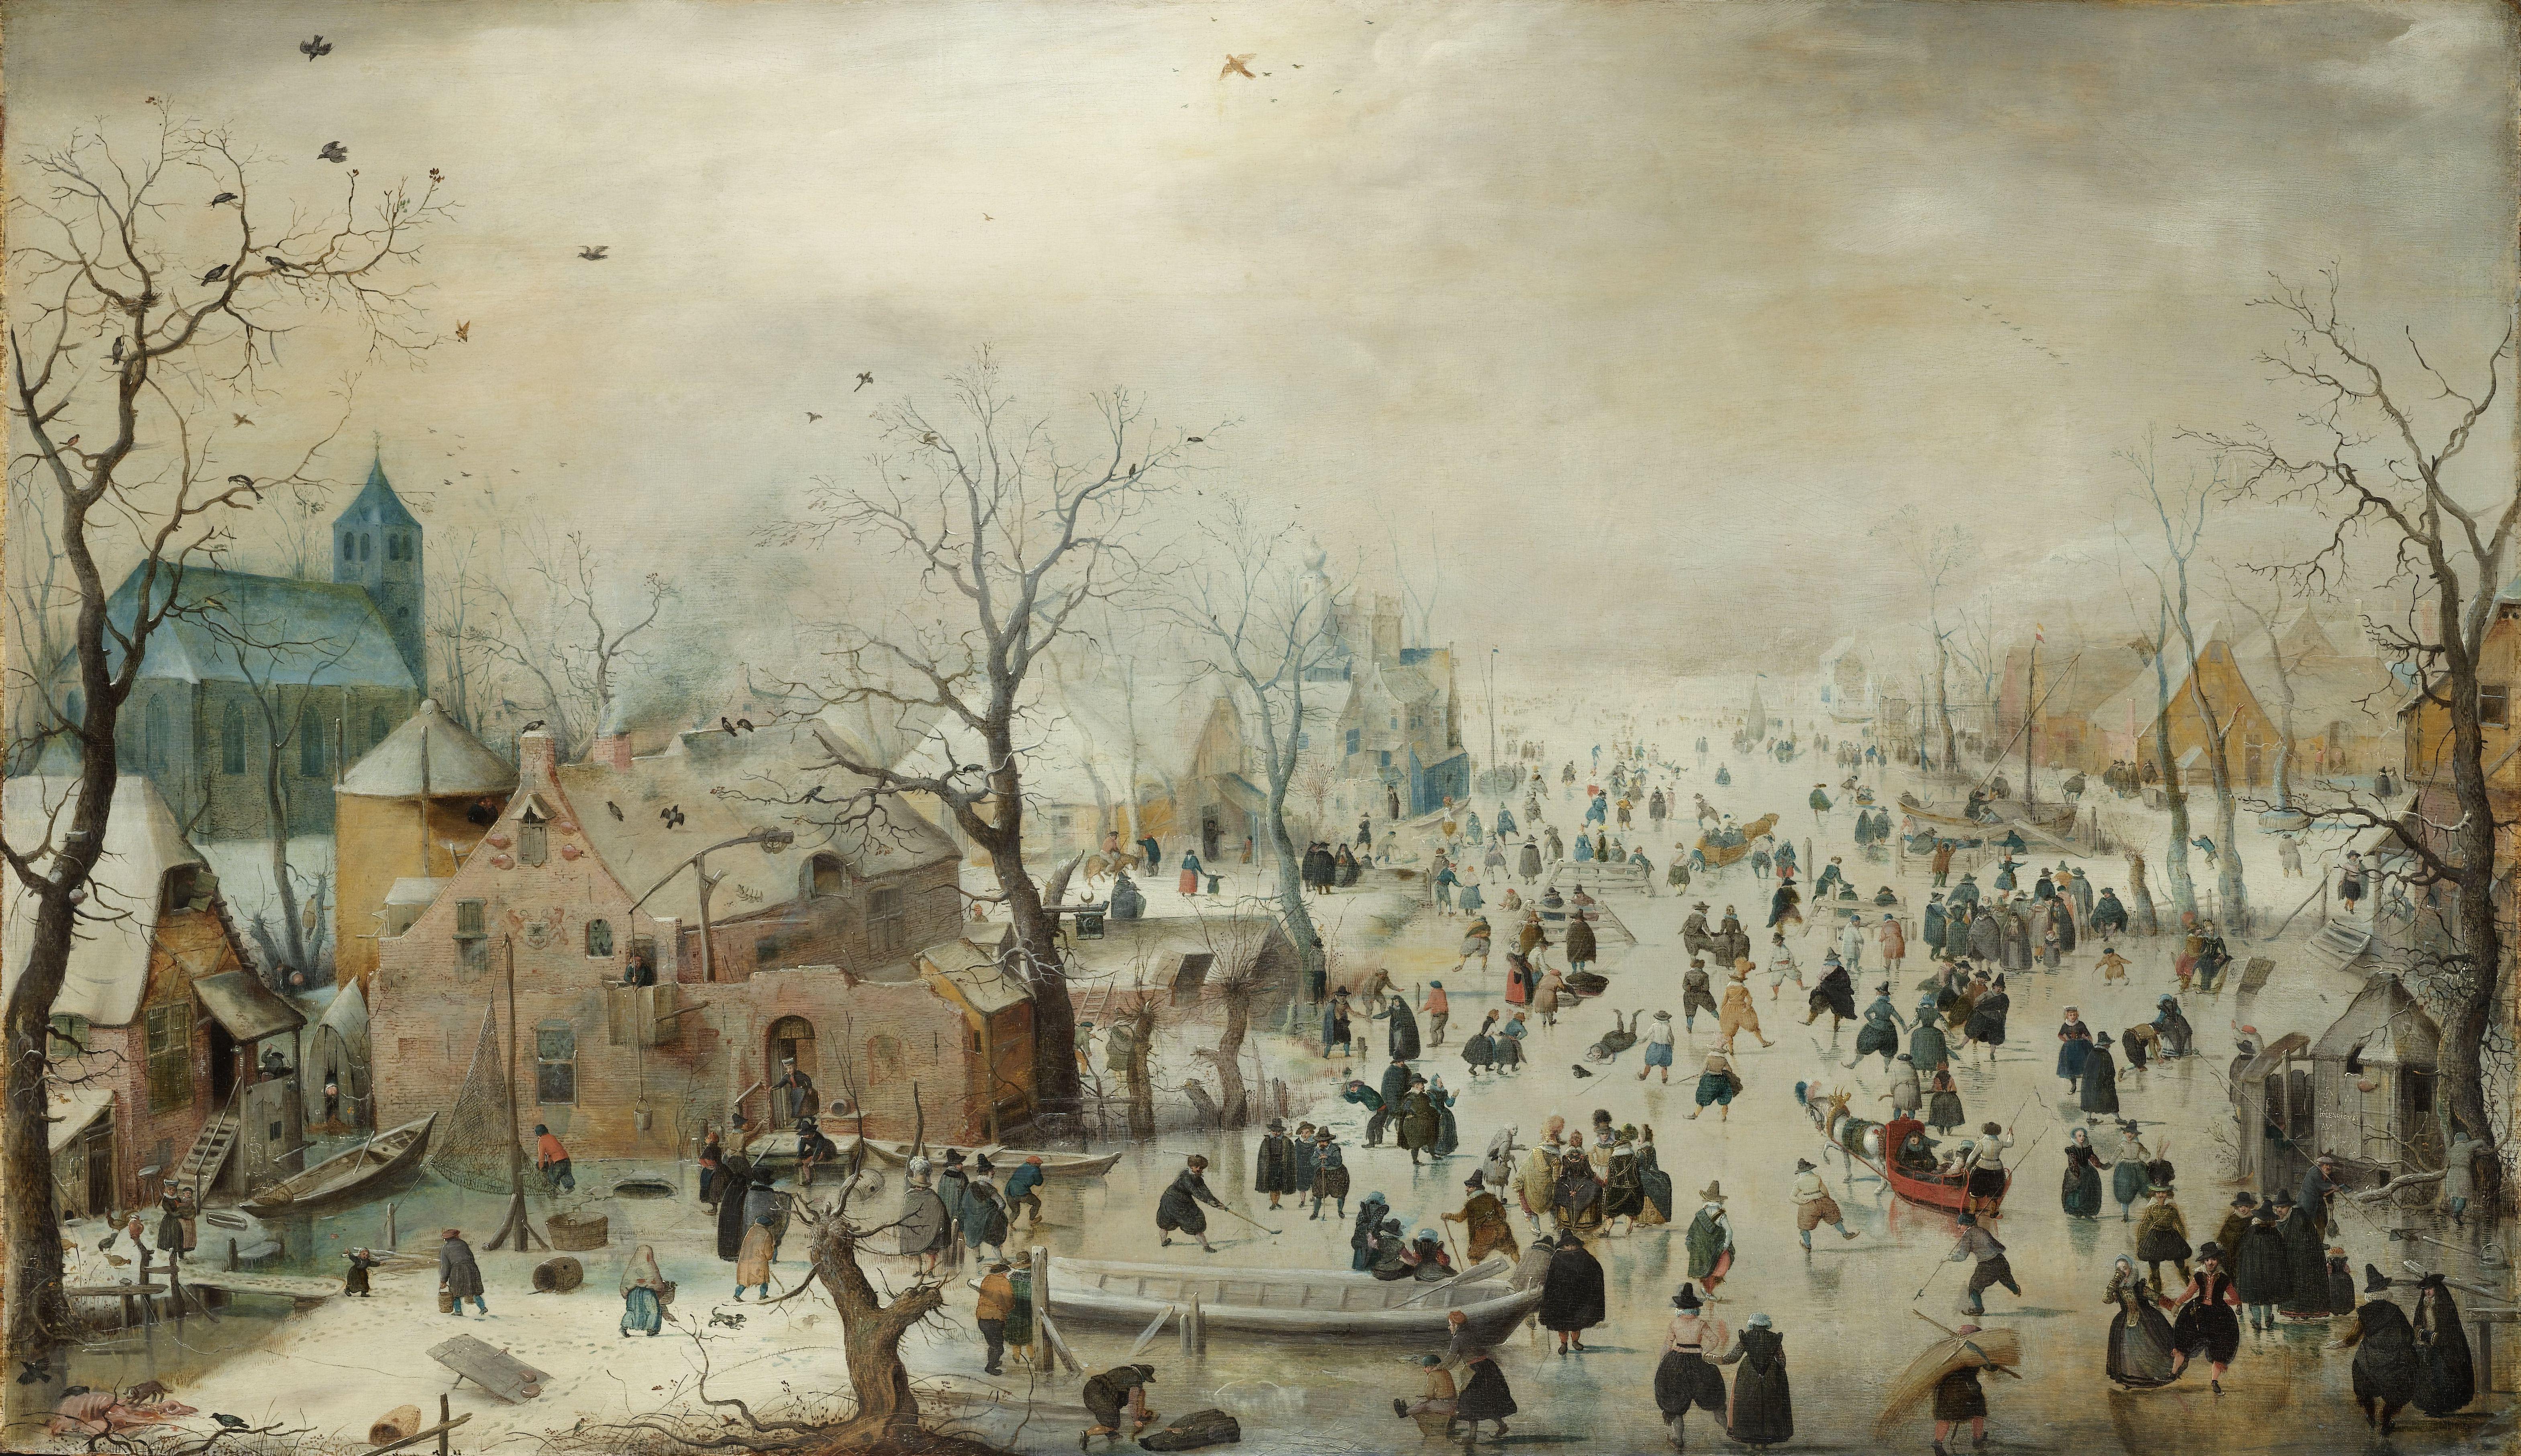 Winter Landscape with Skaters by Hendrick Avercamp, 1608.jpg